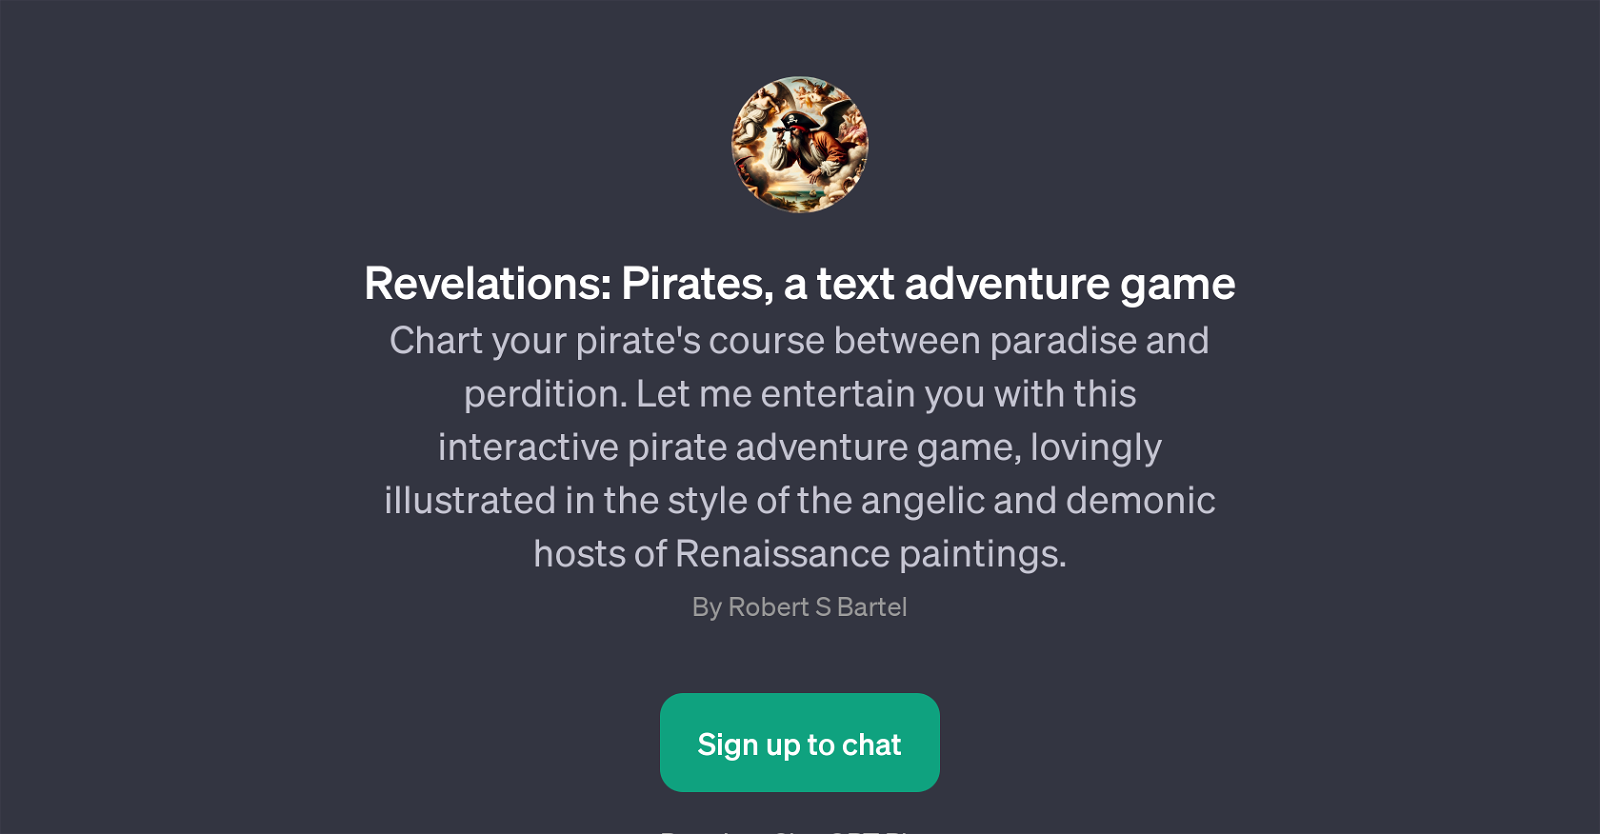 Revelations: Pirates website